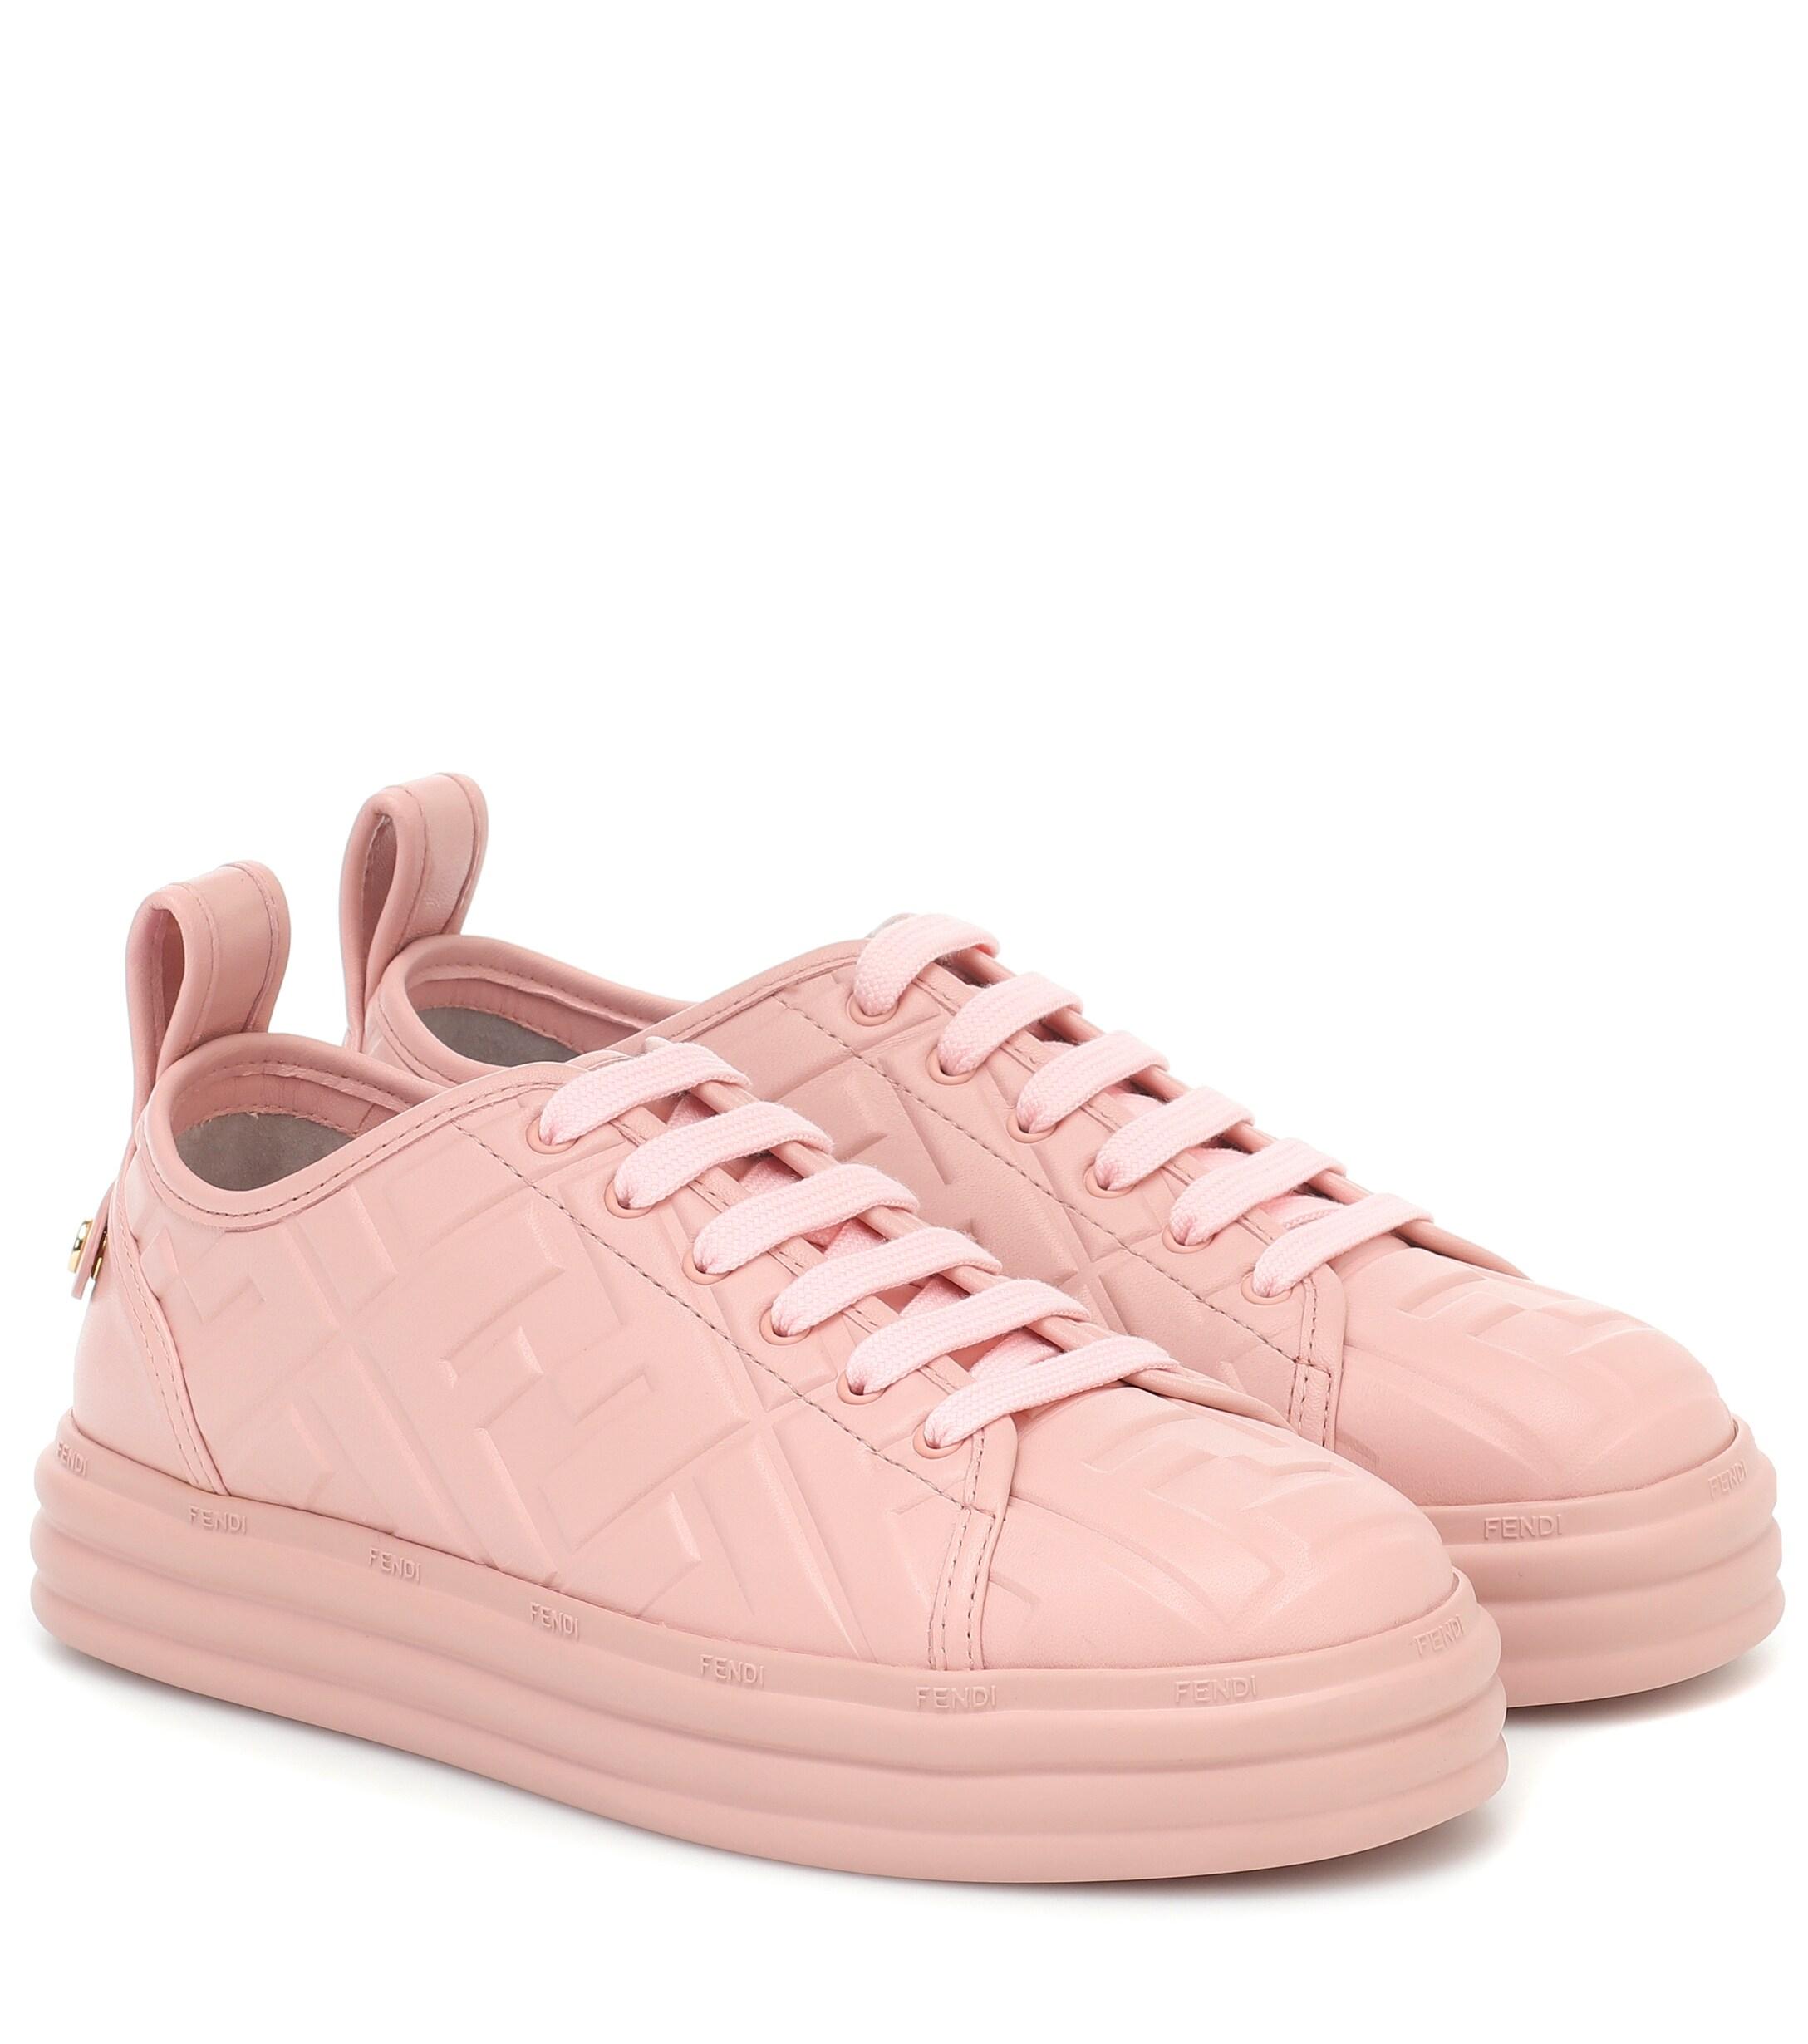 Fendi Ff Embossed Leather Sneakers in Pink | Lyst